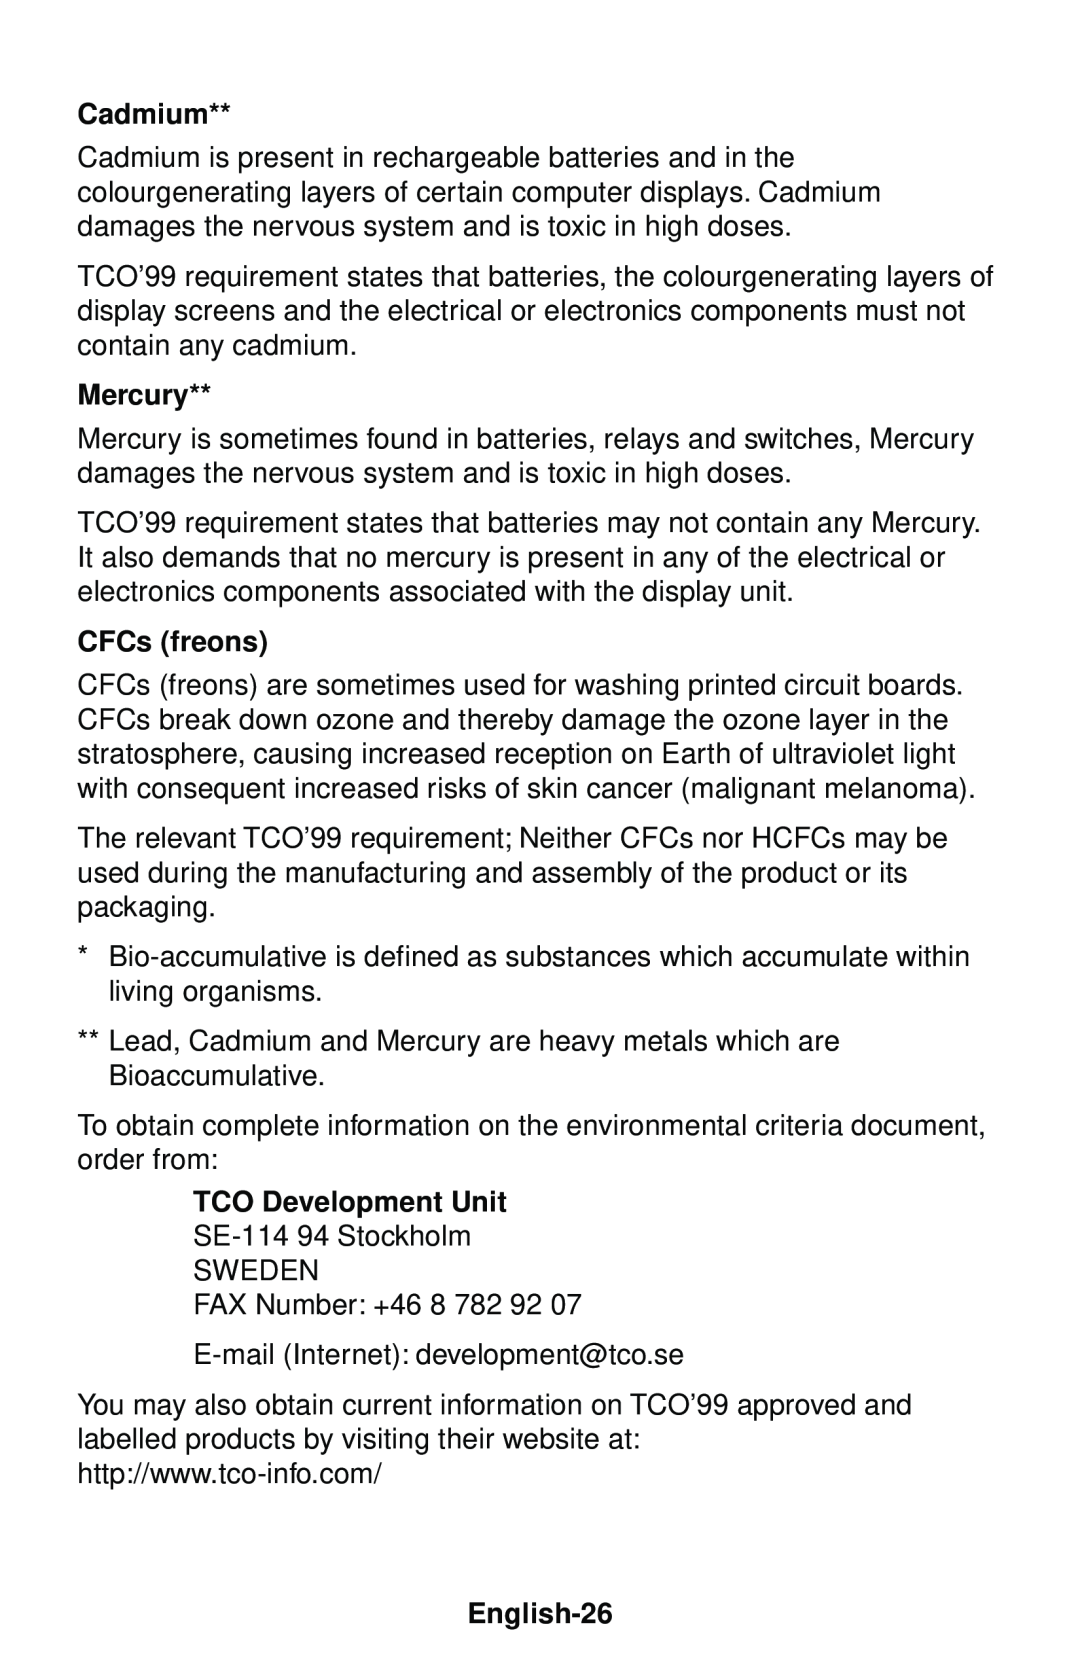 NEC LCD1550V user manual Cadmium, Mercury, CFCs freons, TCO Development Unit, English-26 